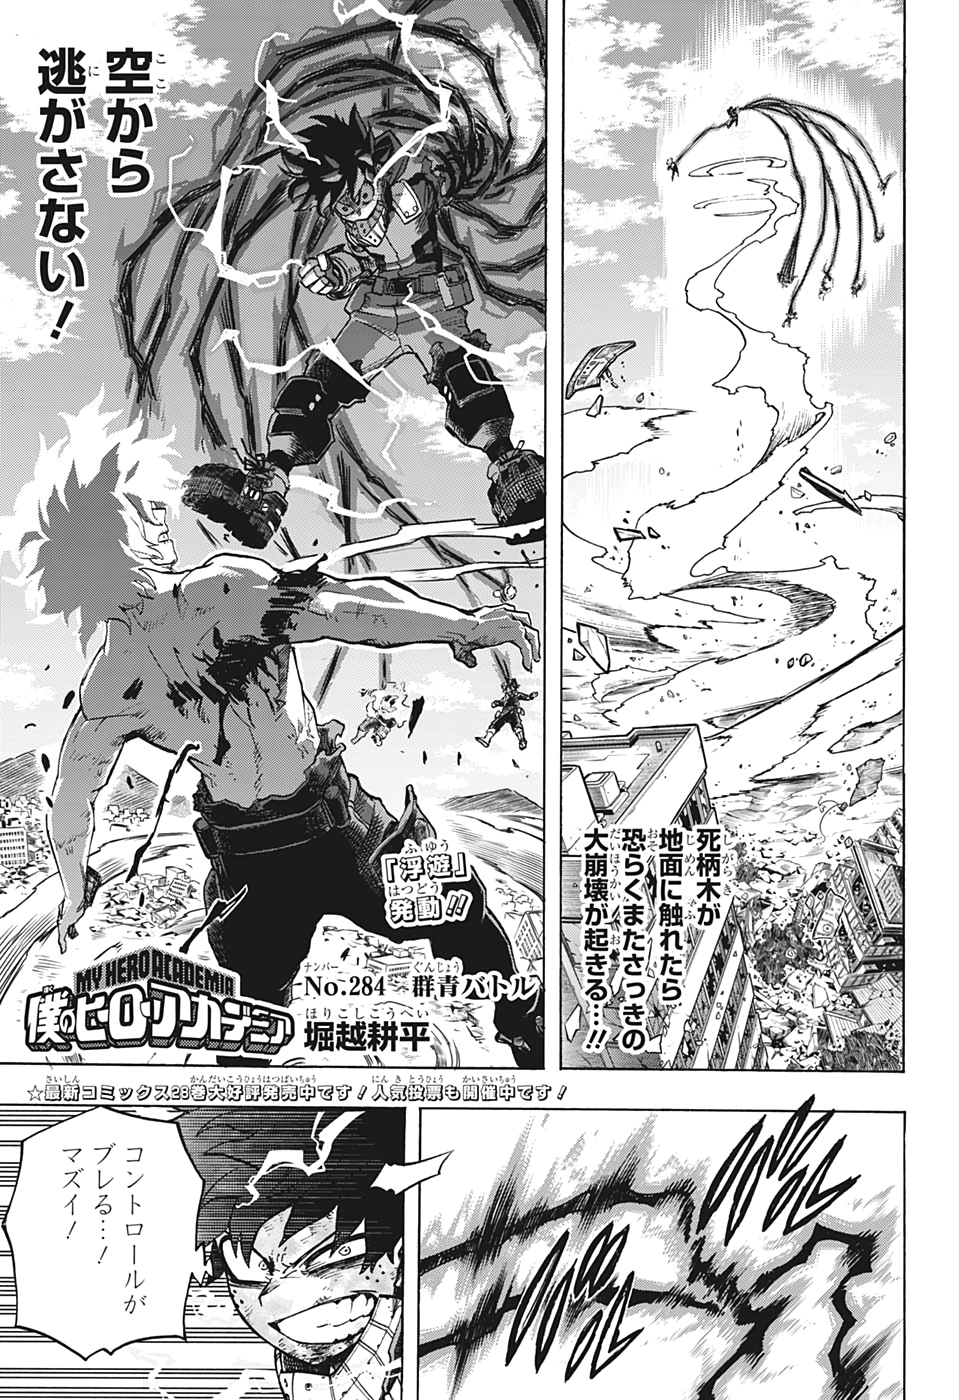 Boku no Hero Academia - Chapter 284 - Page 1